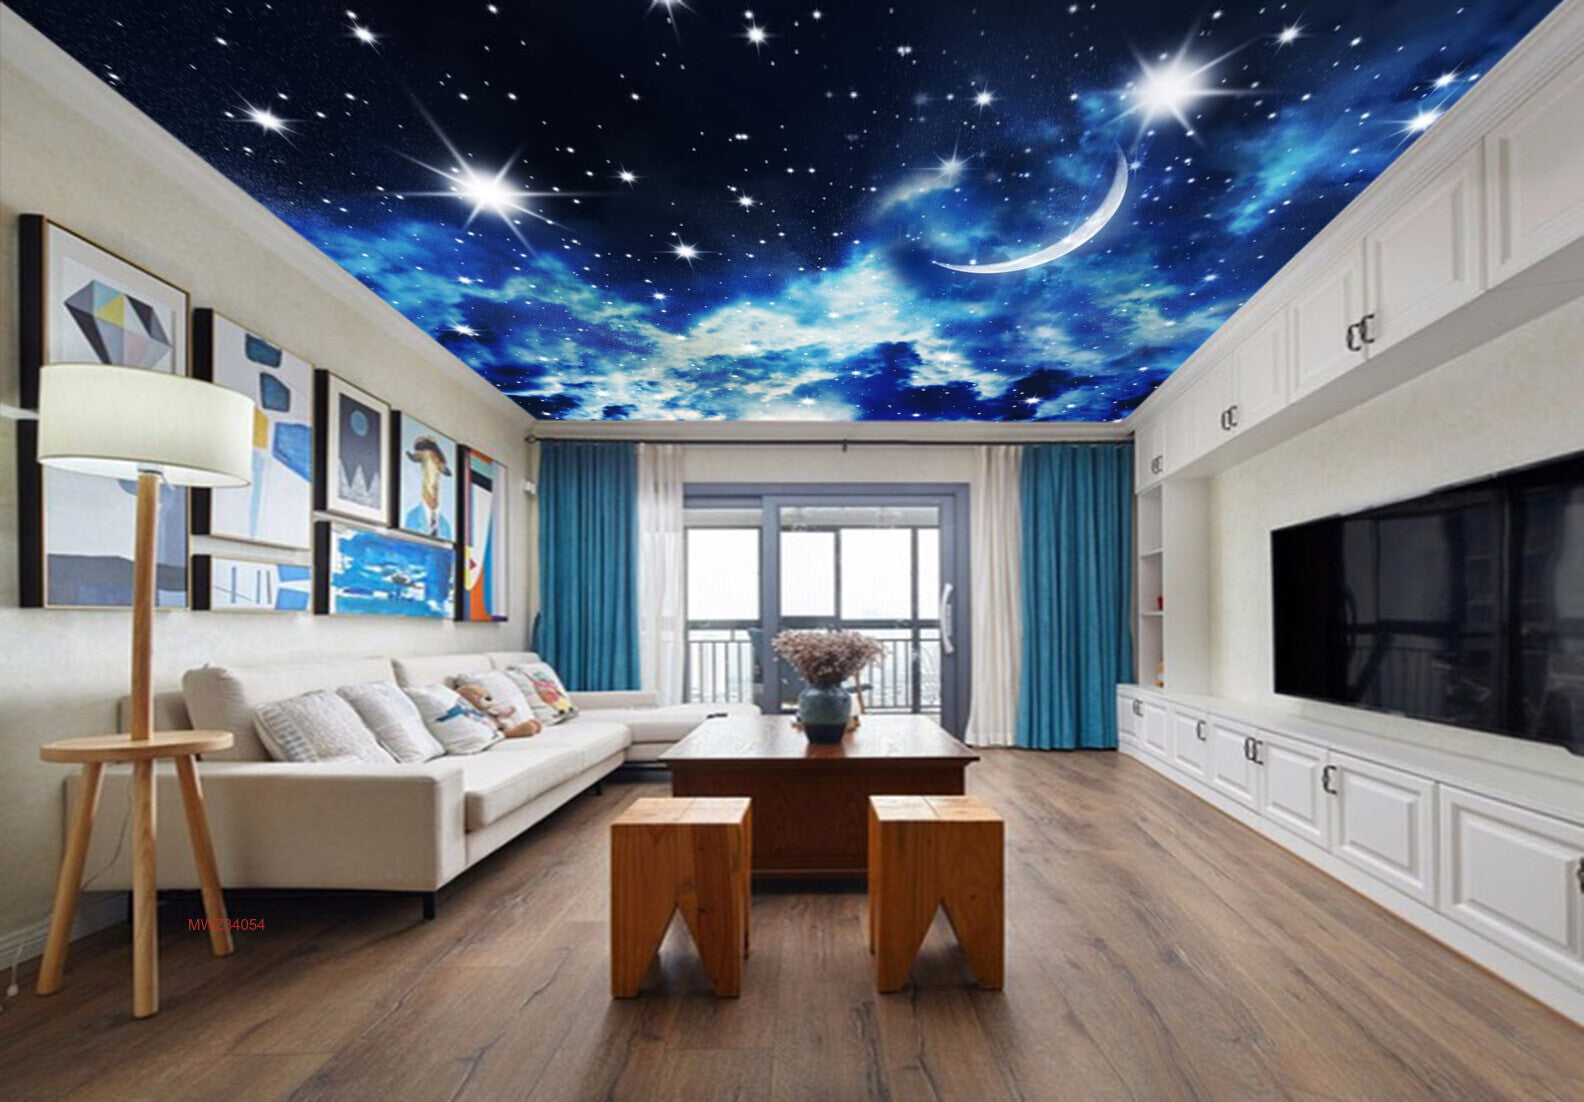 Avikalp MWZ3405 Moon Stars Clouds HD Wallpaper for Ceiling